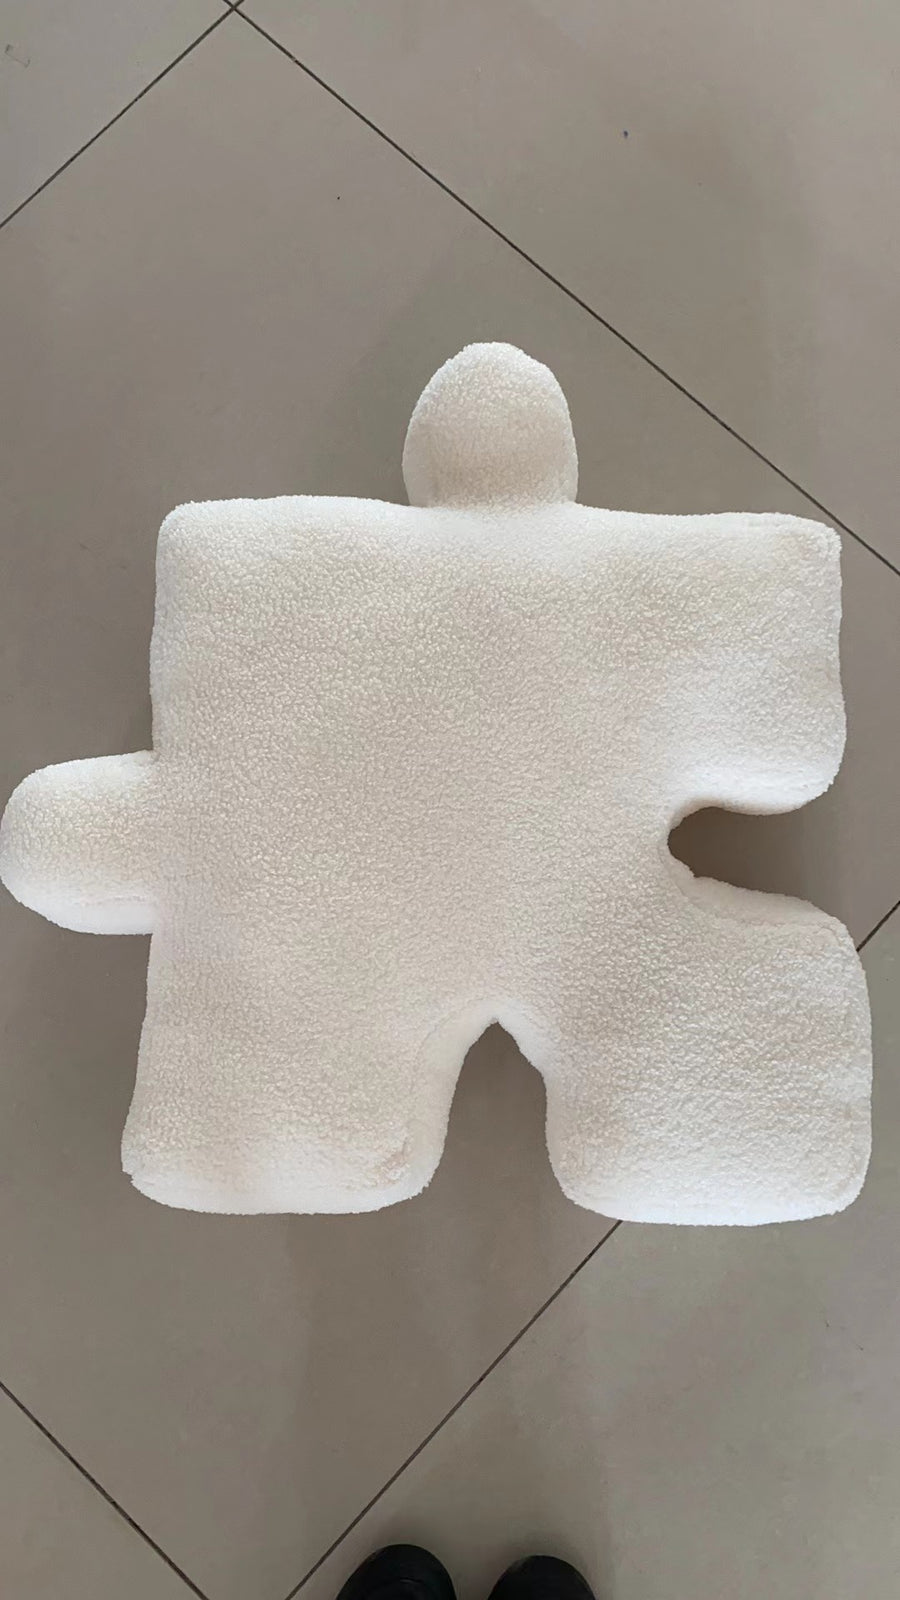 Puzzle Block Pillow